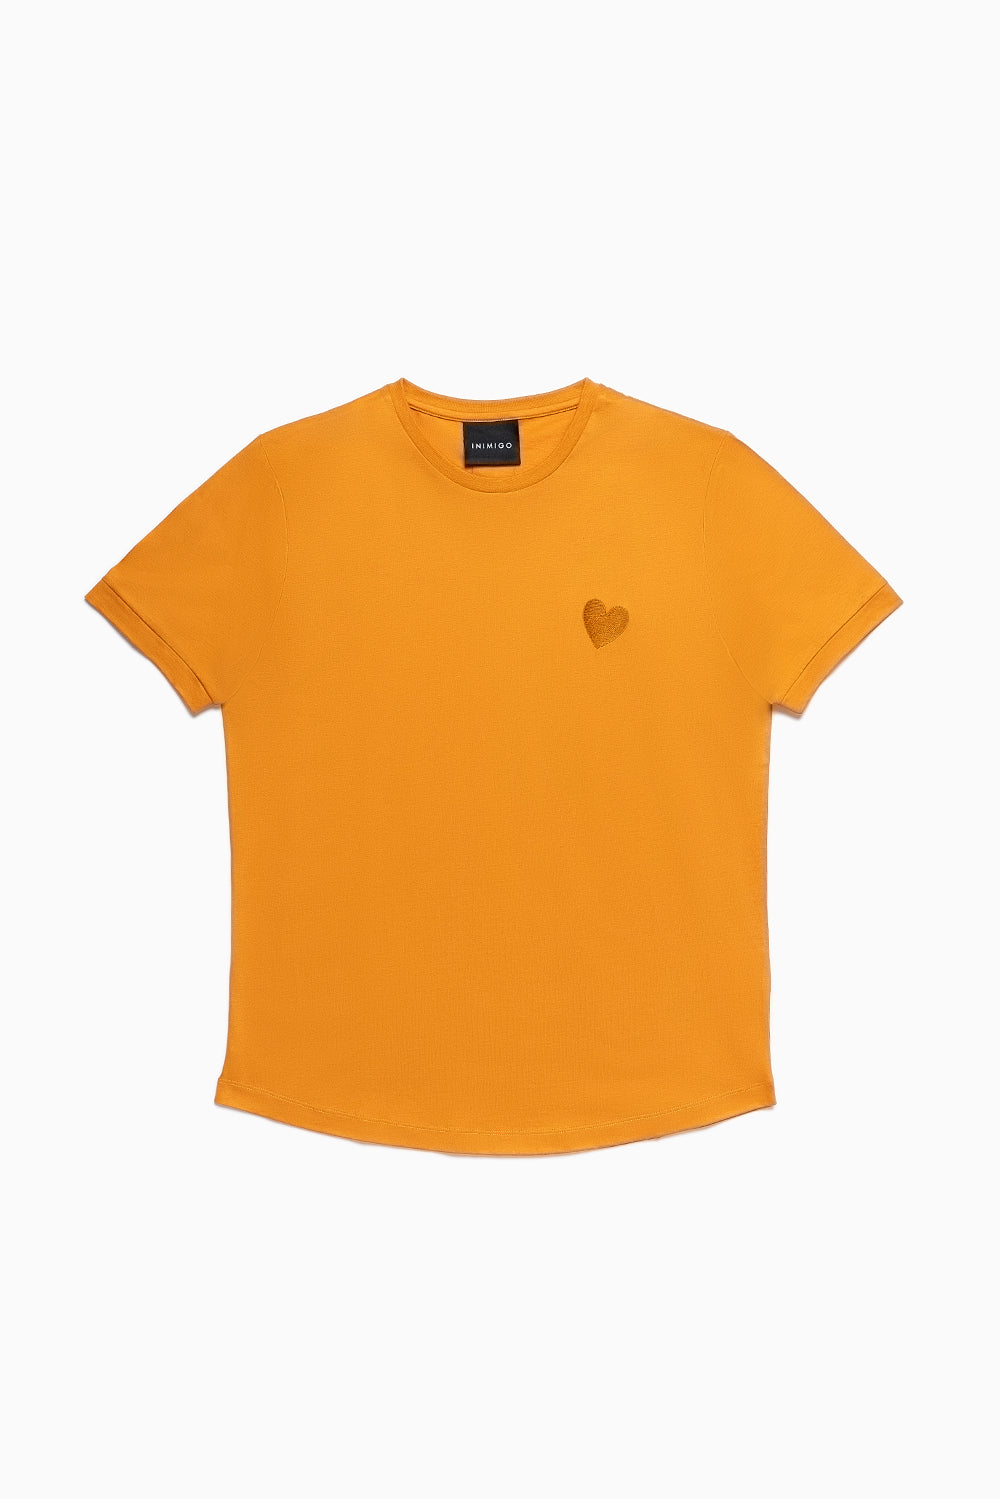 INIMIGO Classic Heart Orange Regular Fit T-Shirt Menswear